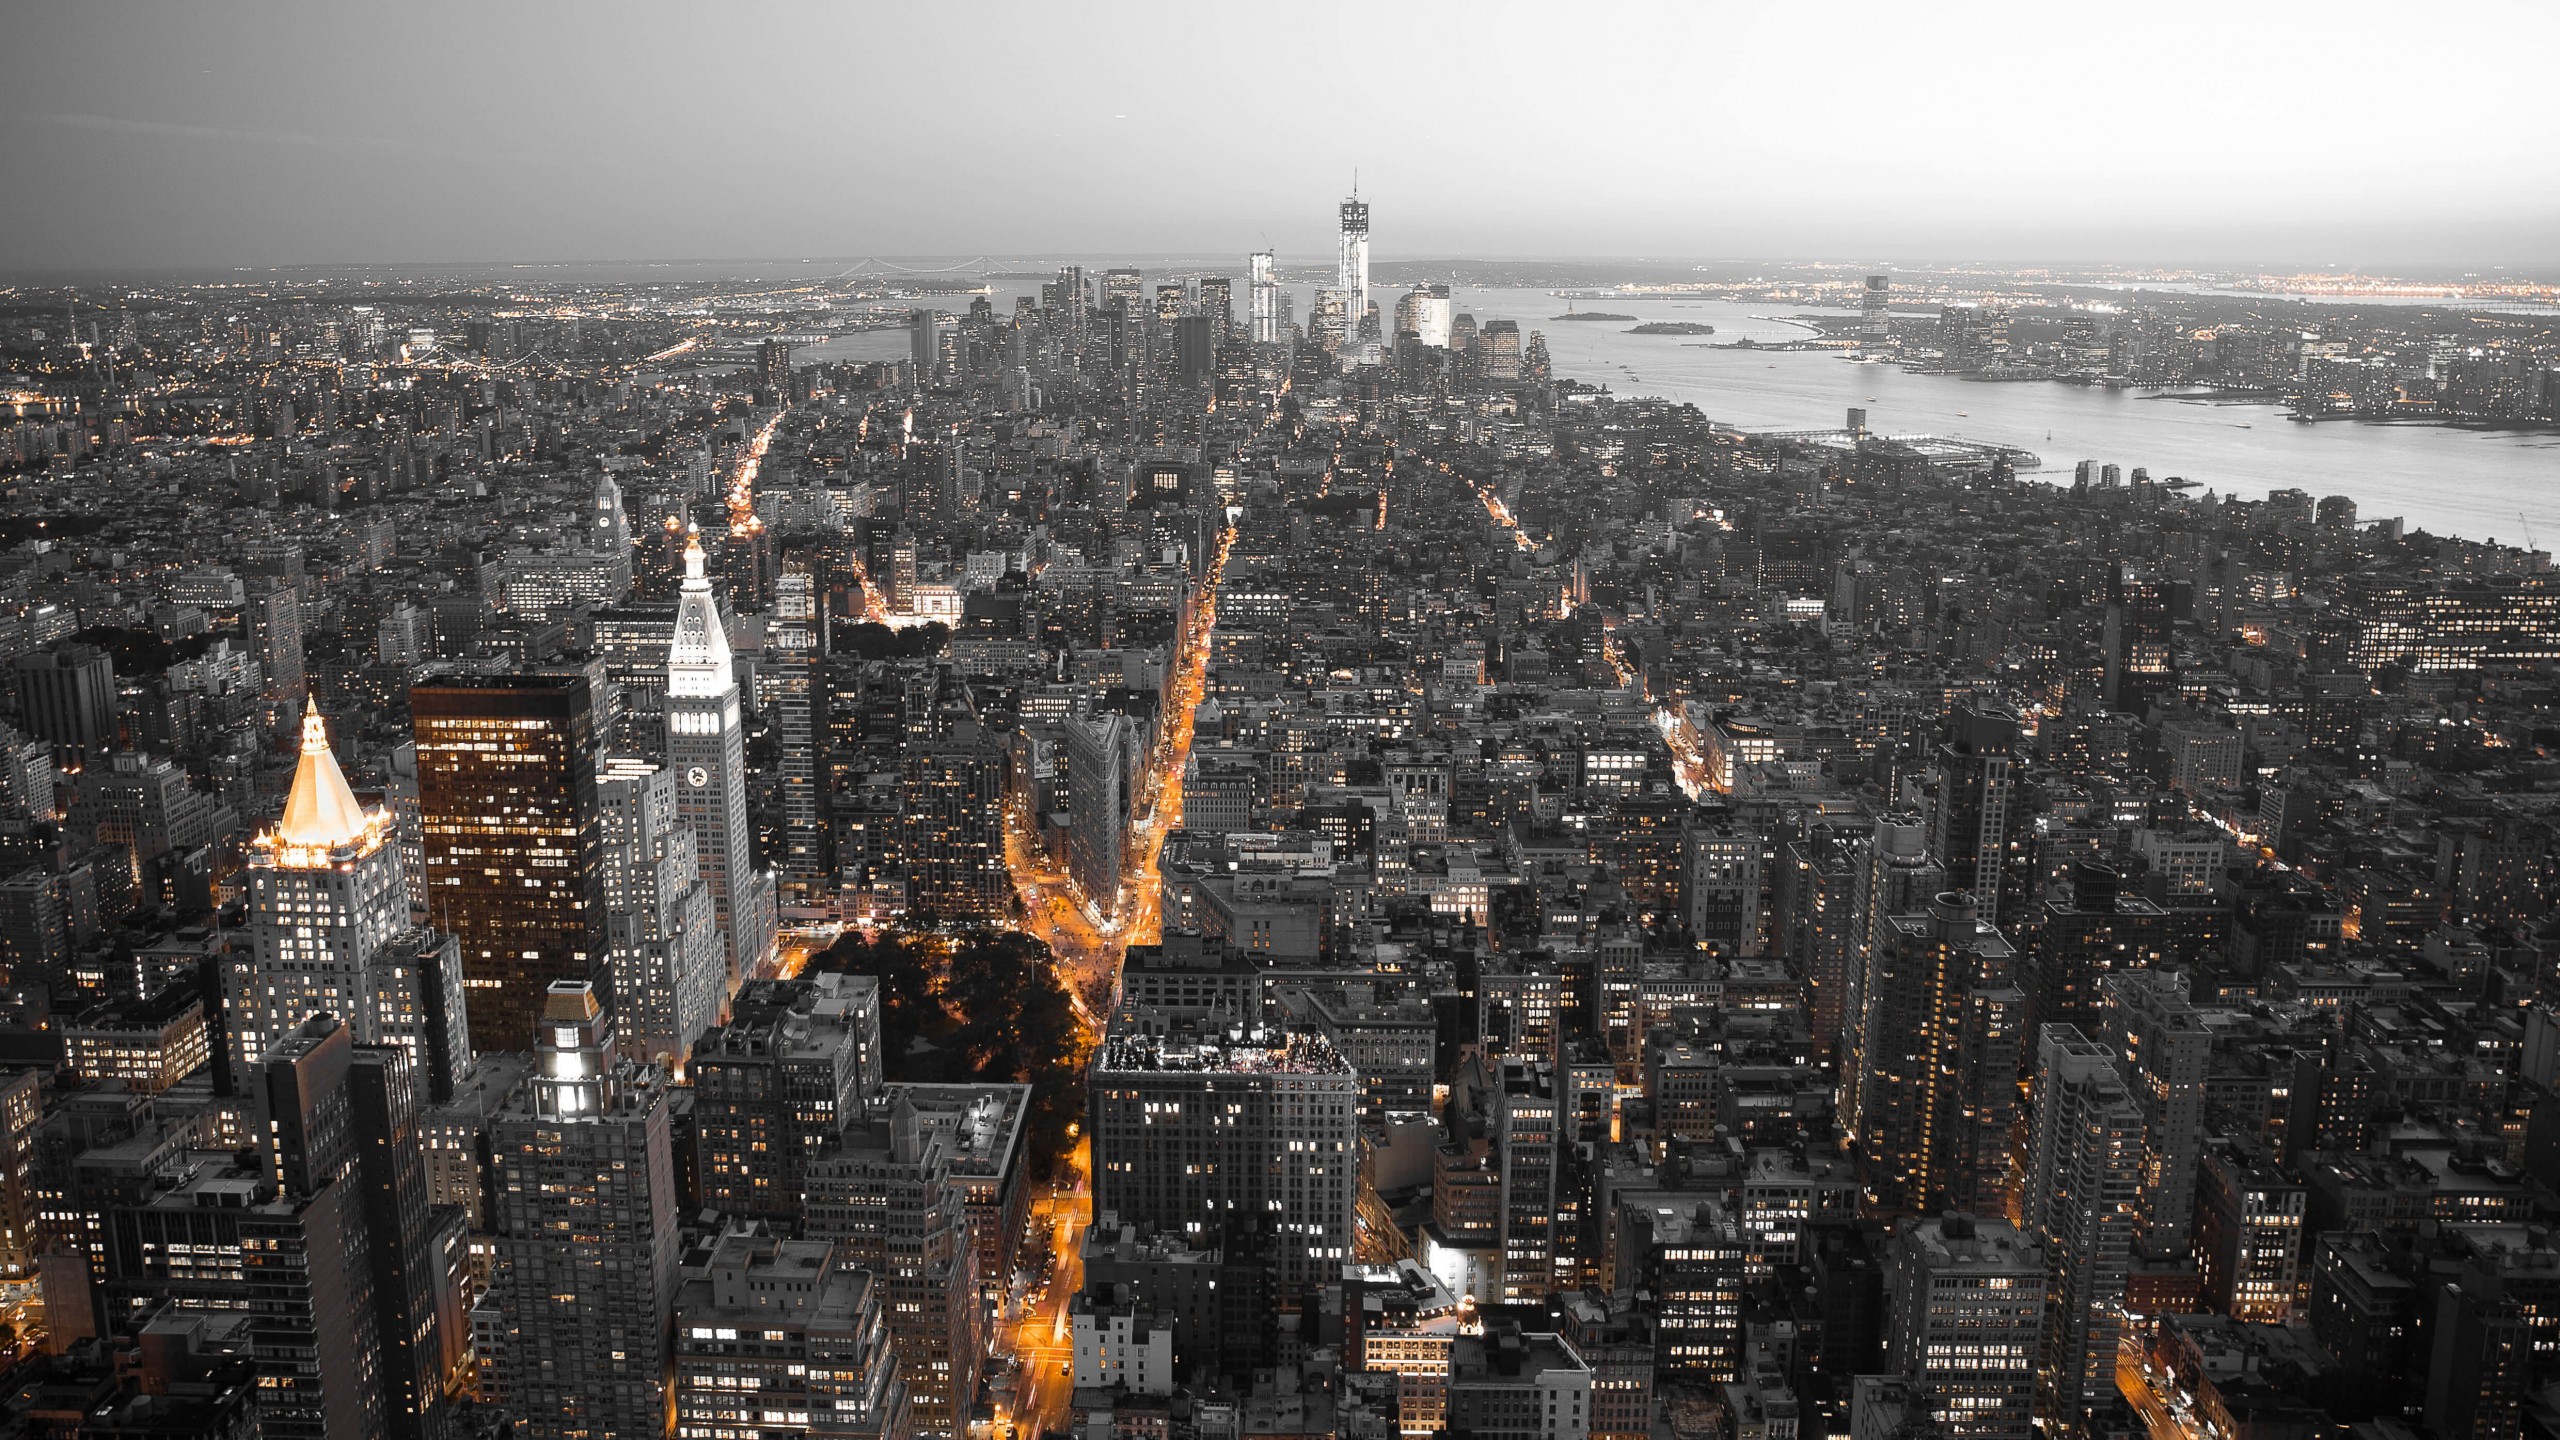 New York City by Night Wallpaper for Desktop 2560x1440